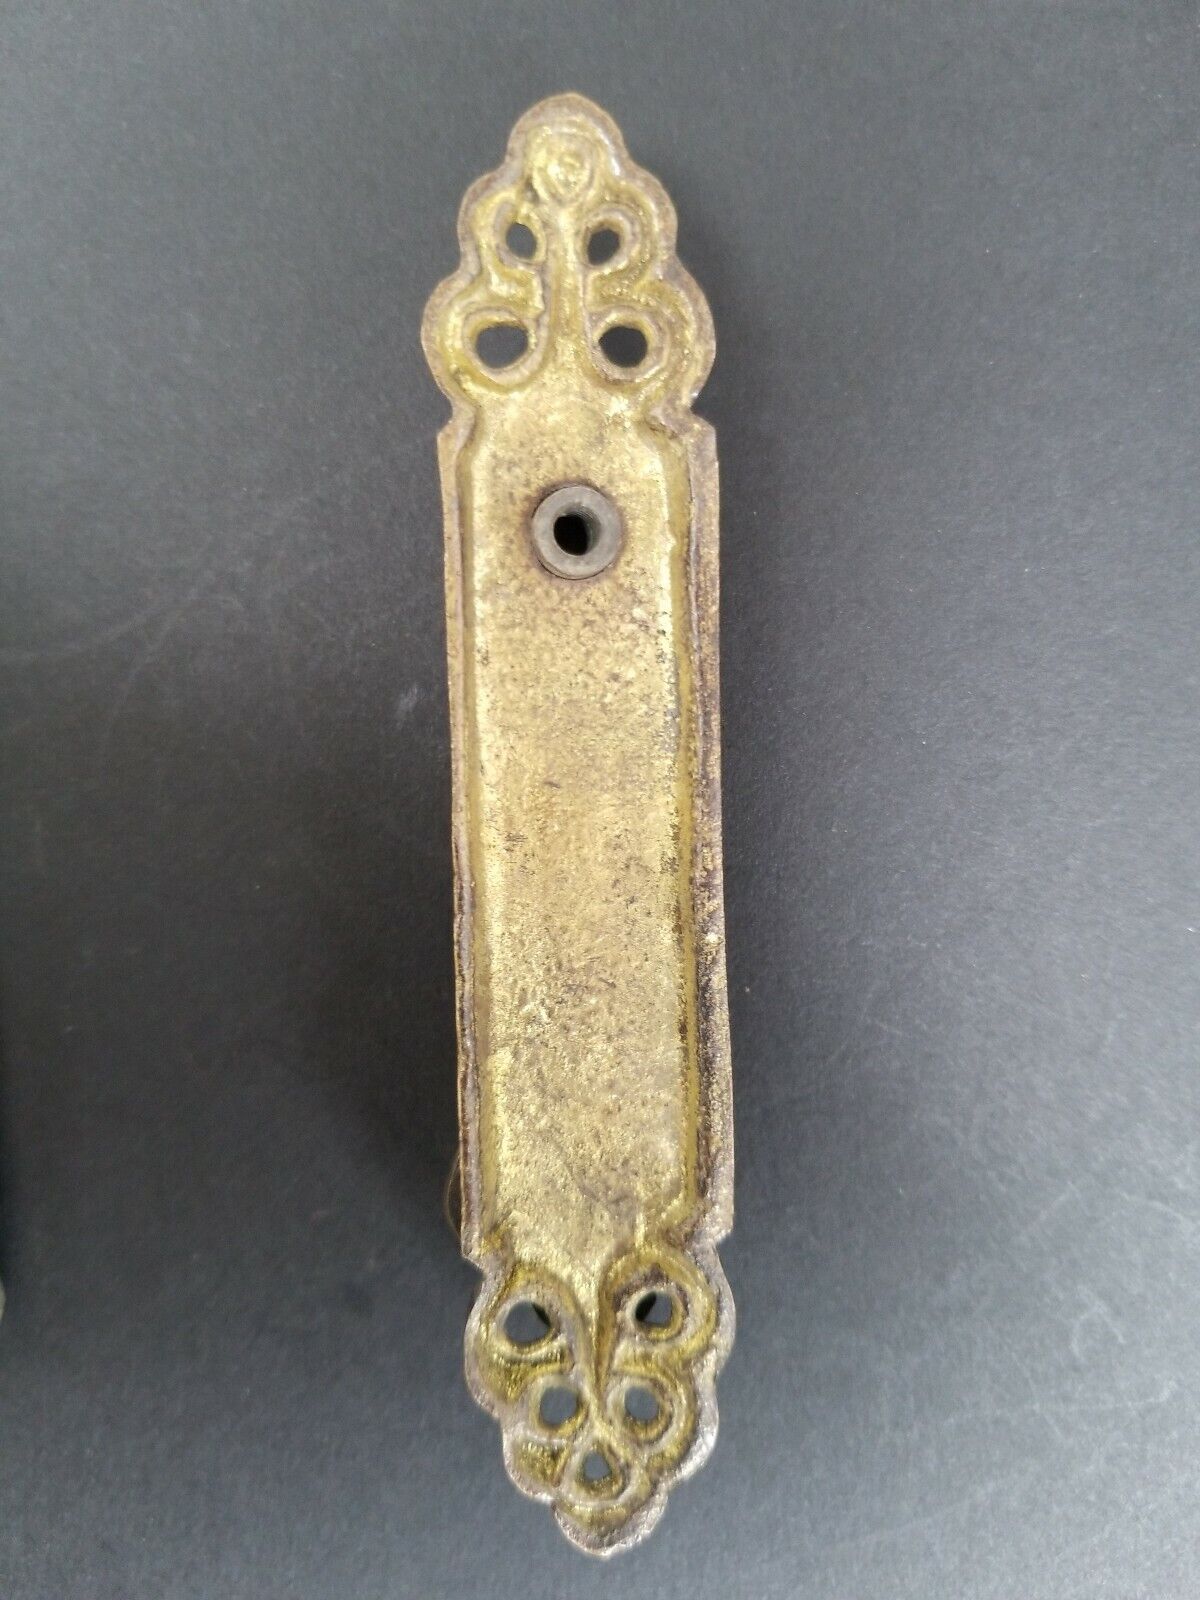 2 Antique Style Vertical Brass Ornate Pendant Drop Pull Handles 4-1/4"long #Z38